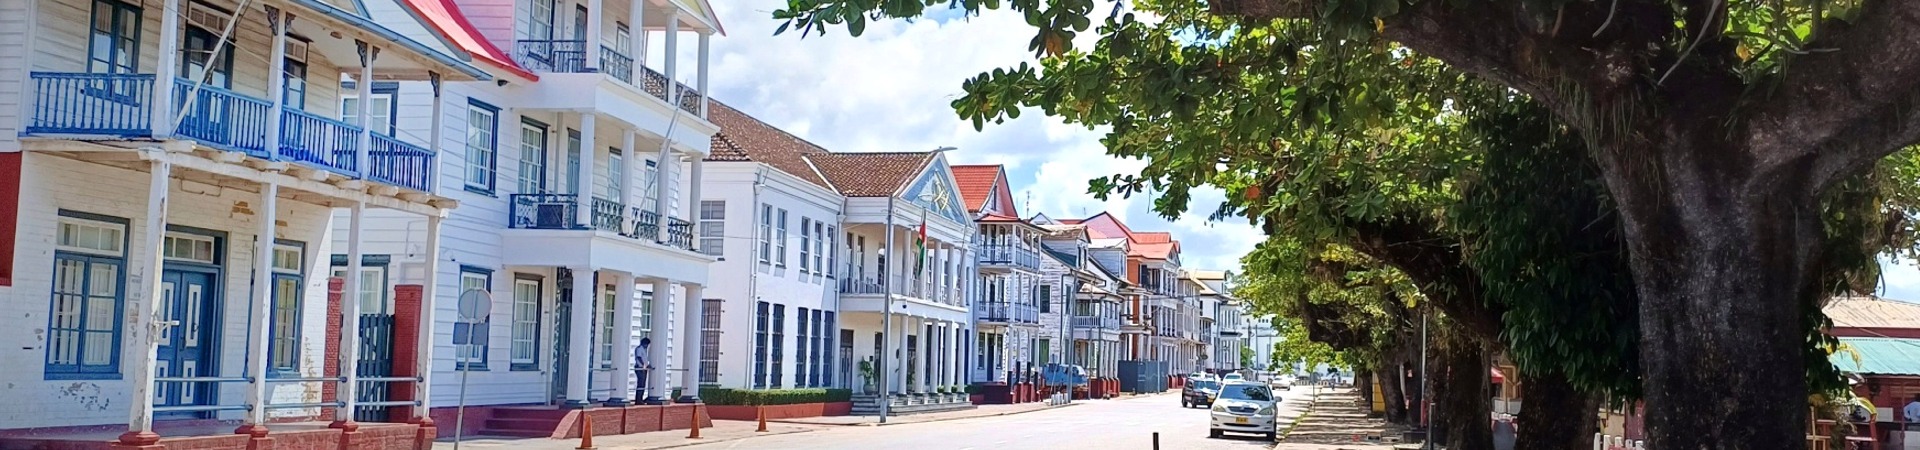 Terzol Vastgoed NV - Vastgoed & projectontwikkeling in Paramaribo, Suriname